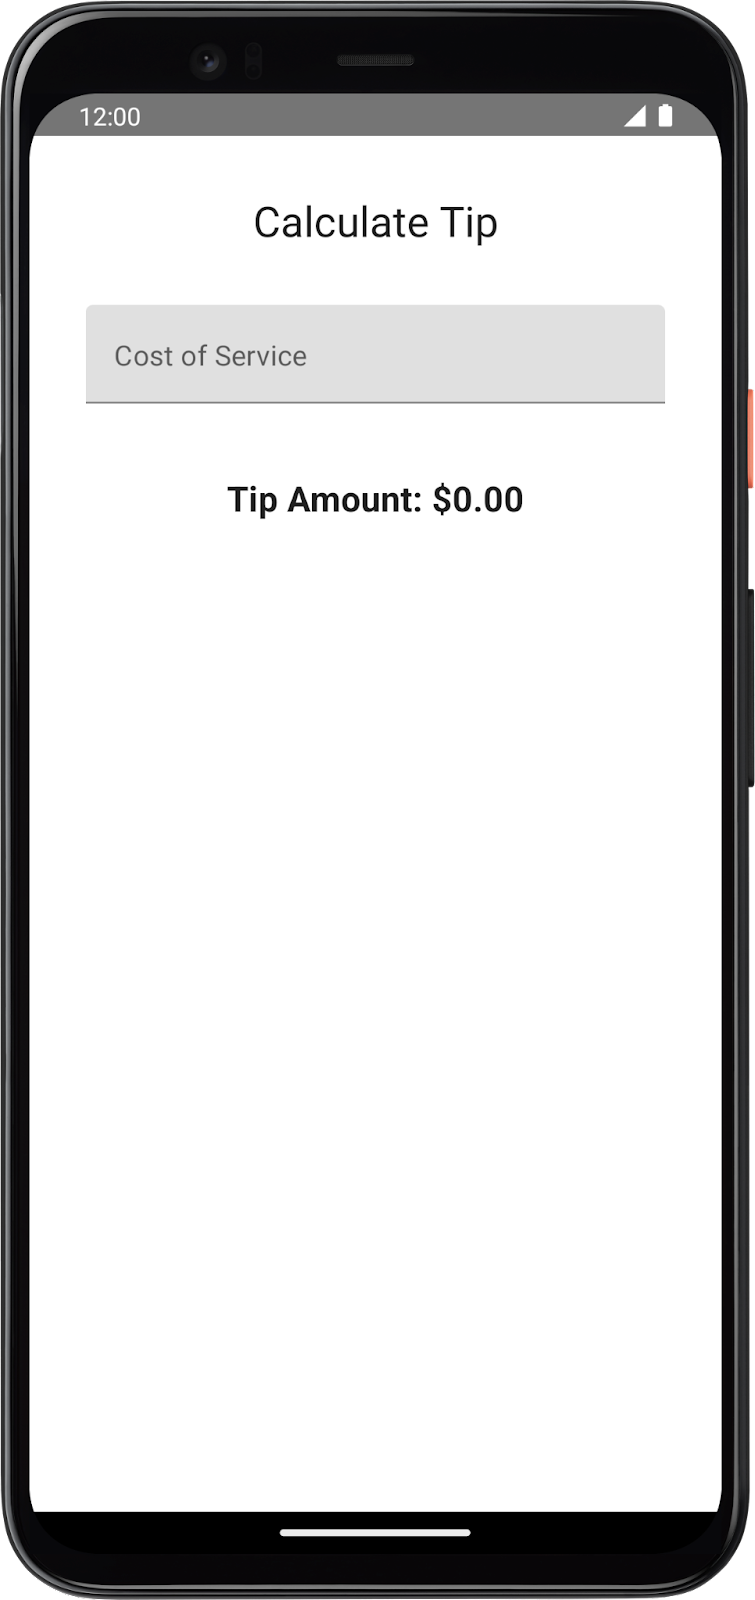 Kalkulator tip dengan kolom teks Cost of service